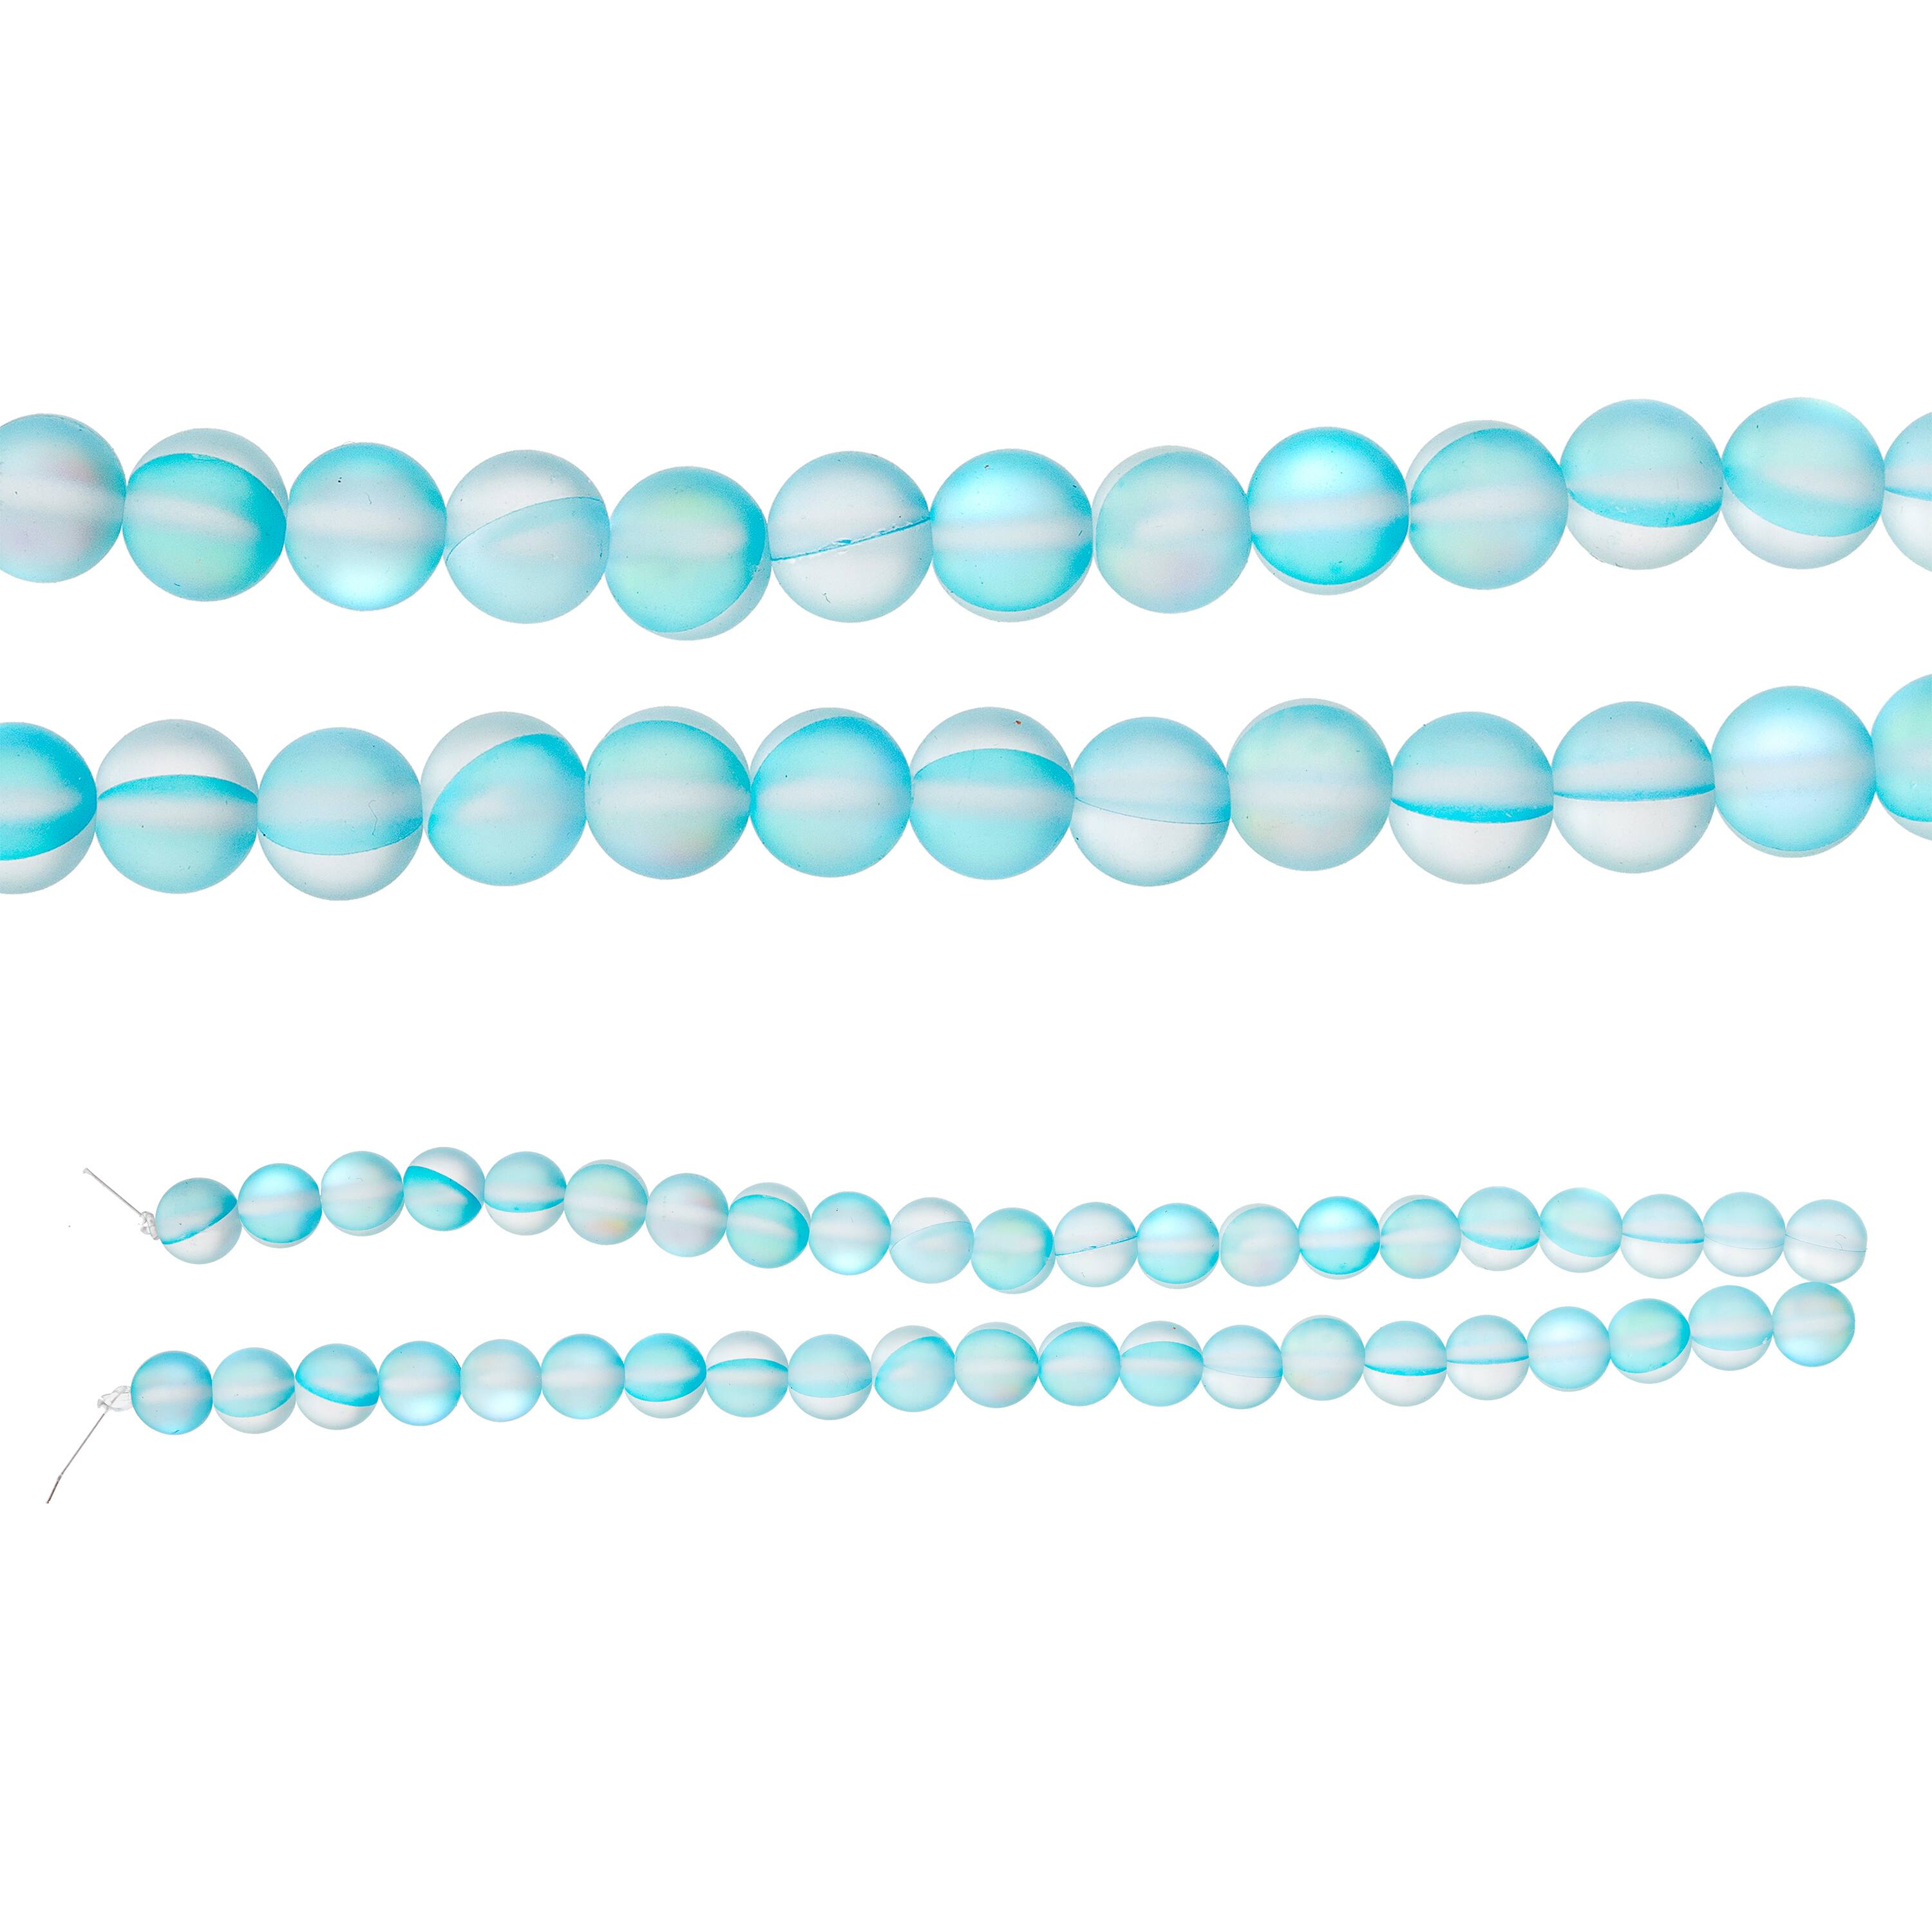 6 mm light aqua pearls